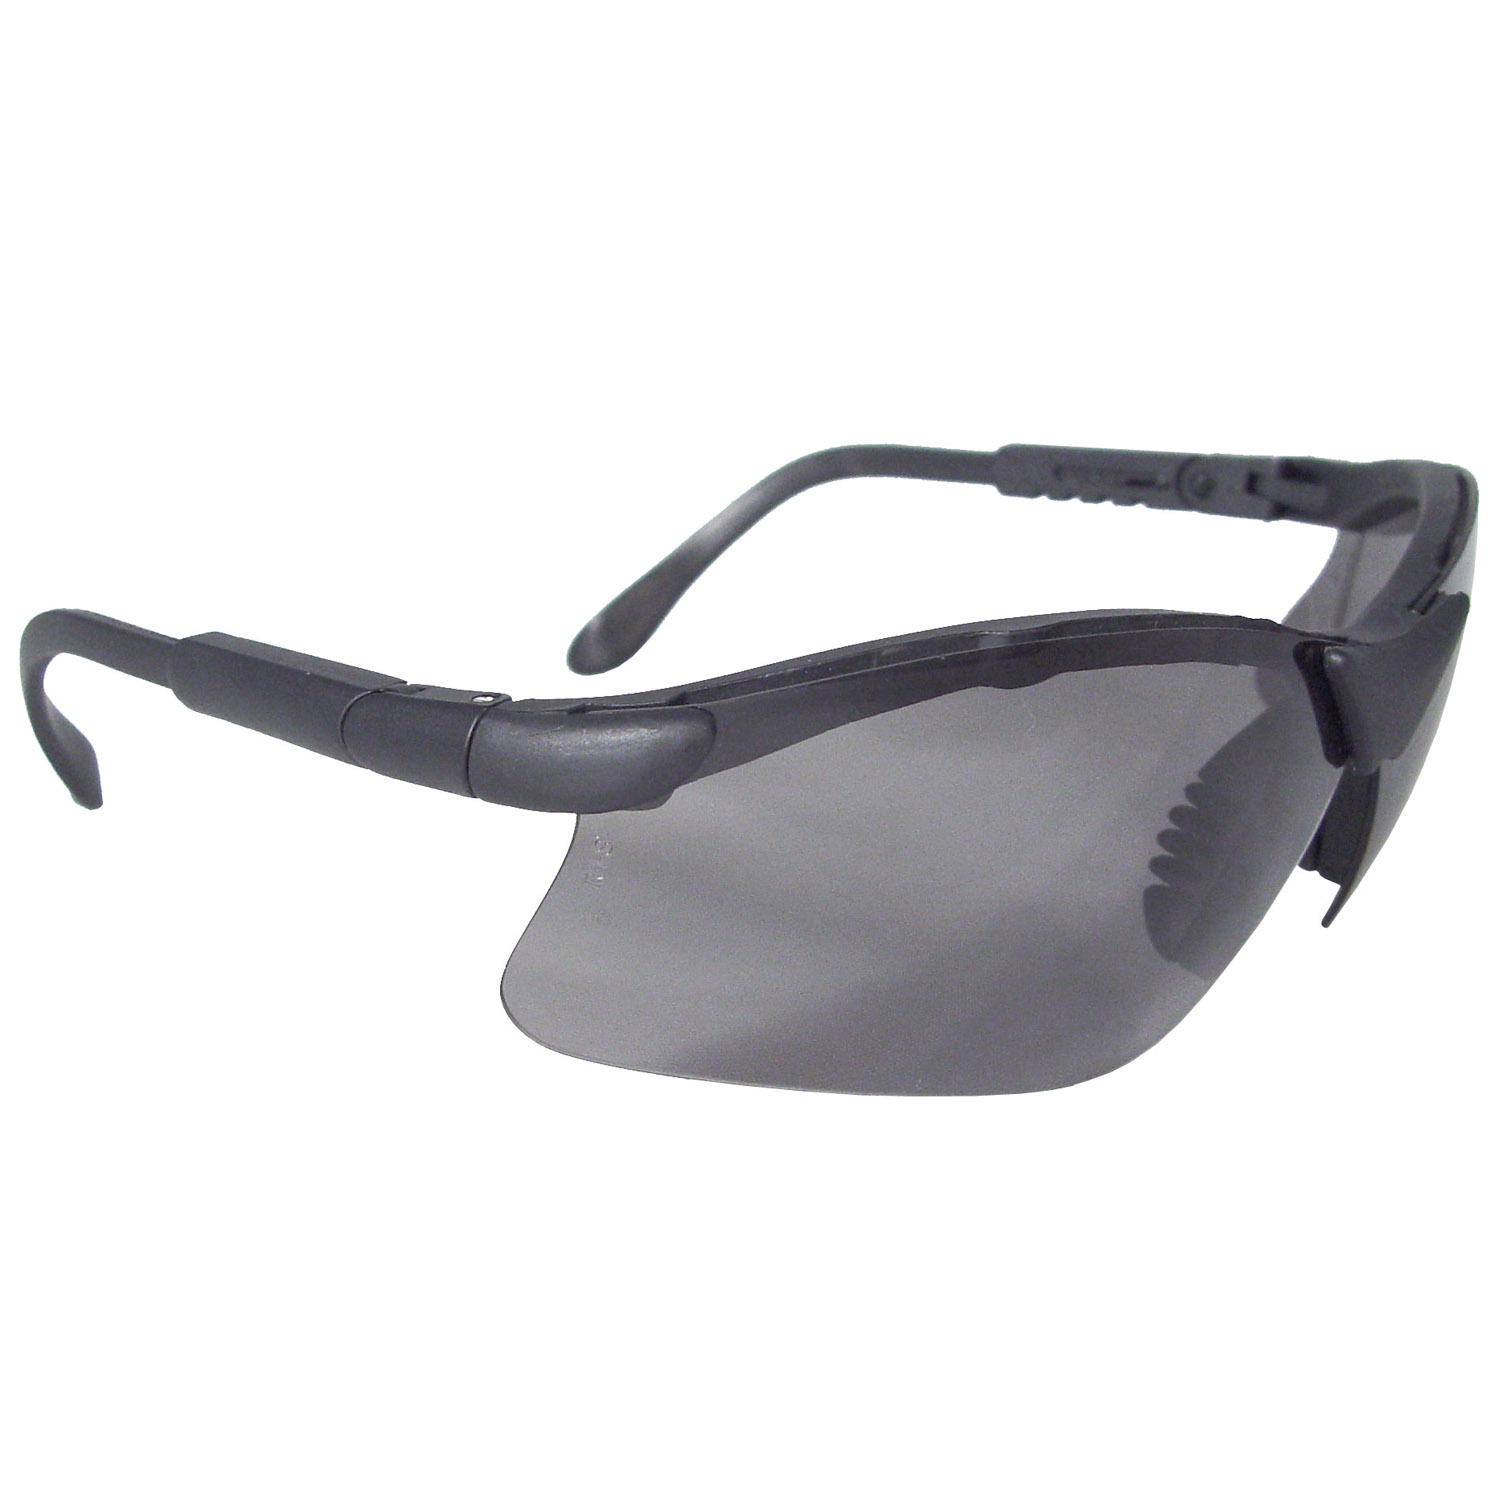 Revelation™ Safety Eyewear - Black Frame - Smoke Anti-Fog Lens